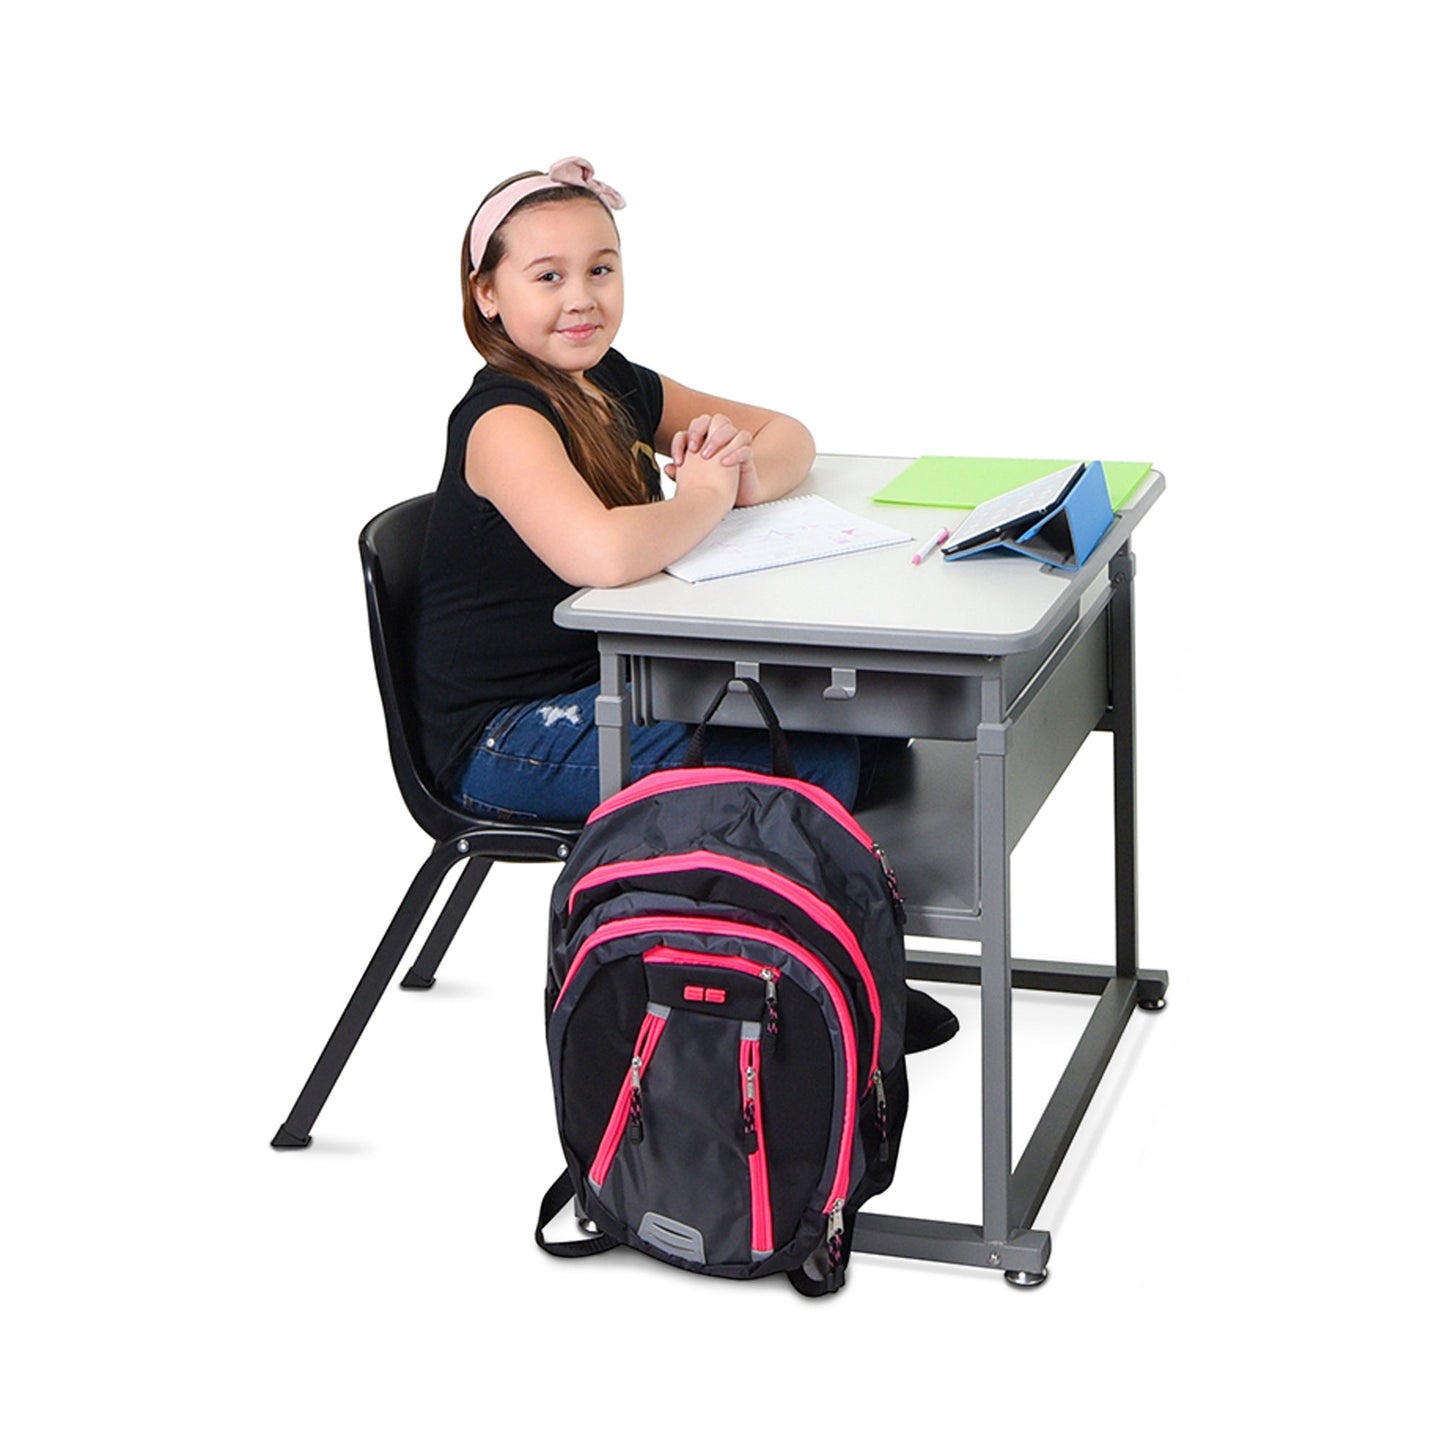 Luxor STUDENT-M - Student Desk - Manual Adjustable Desk (LUX-STUDENT-M) - SchoolOutlet